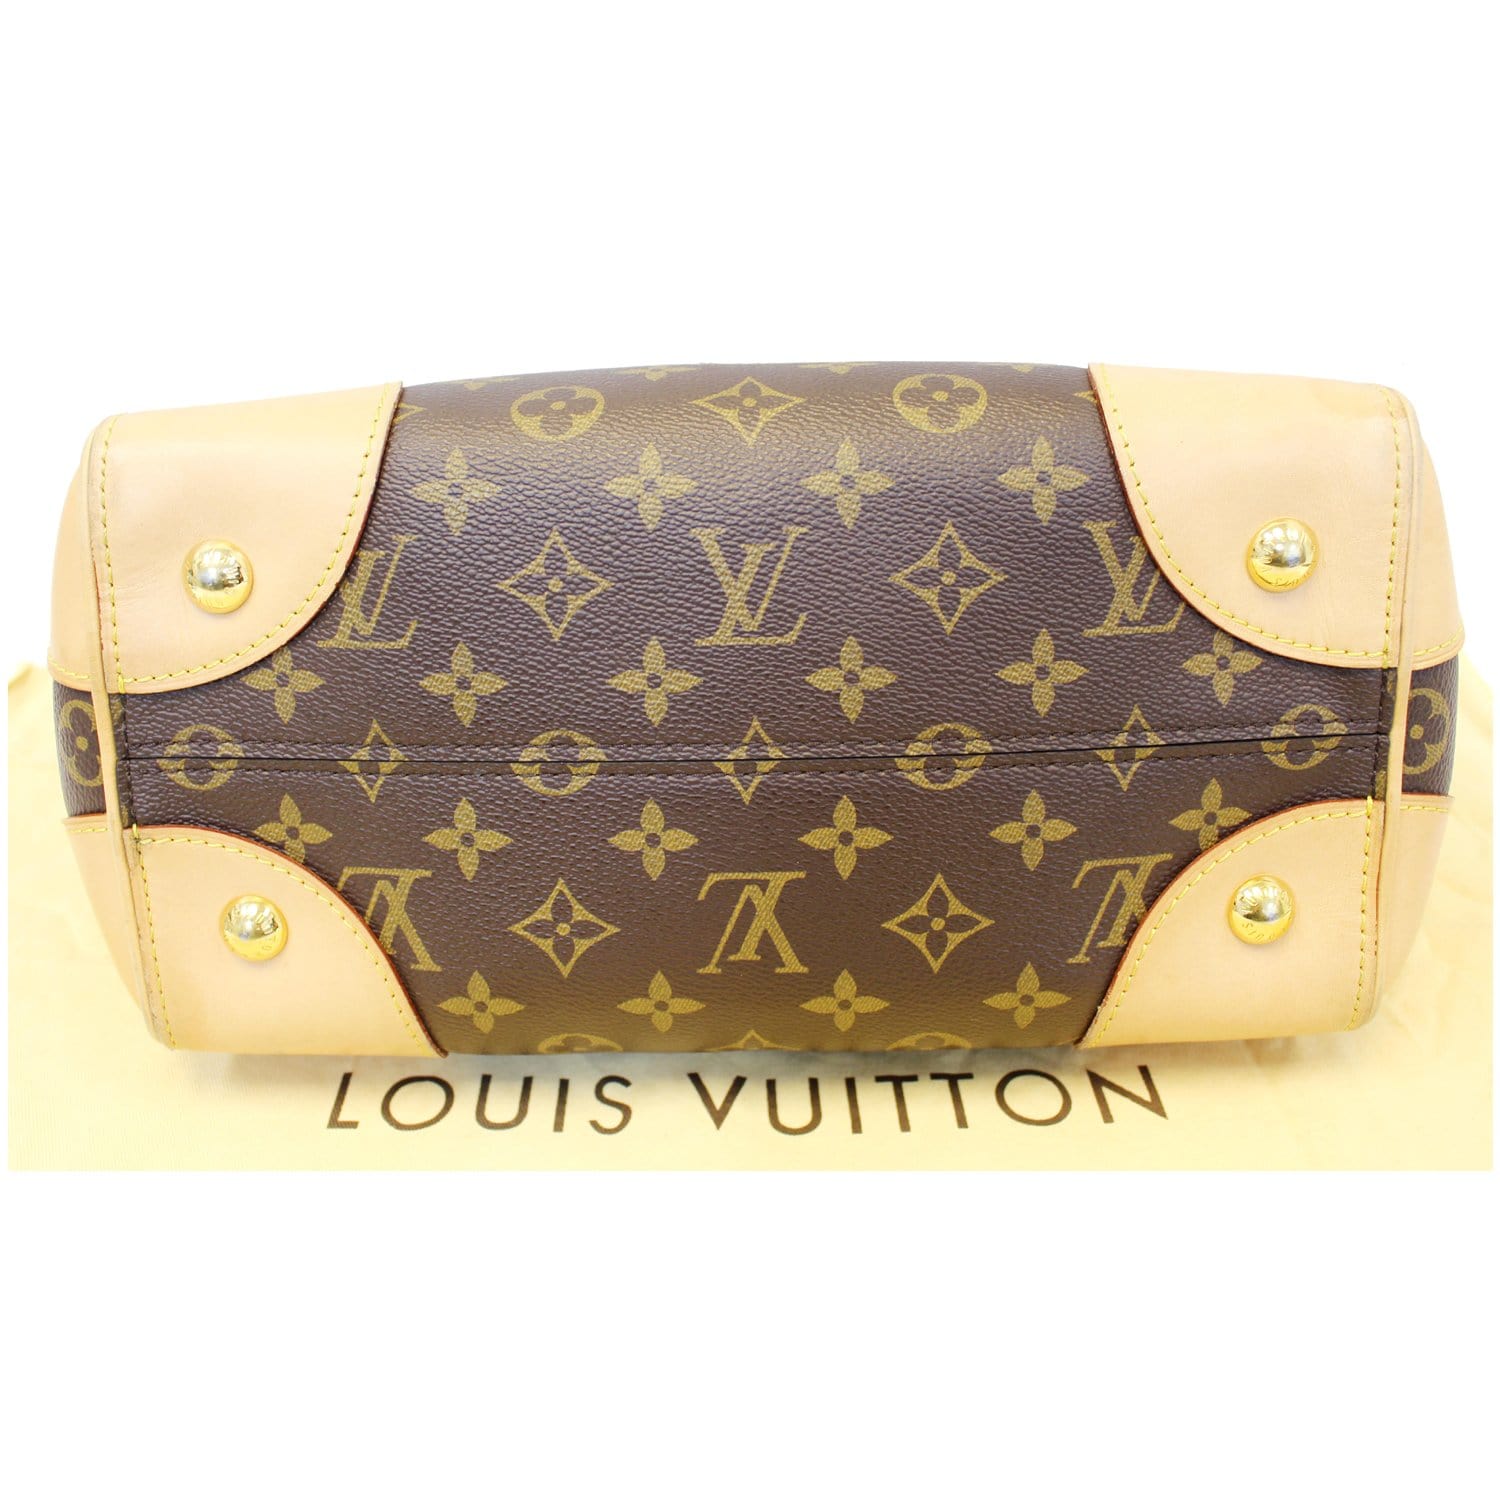 Louis Vuitton, Bags, Louis Vuitton Phenix Tote Monogram Canvas Pm Brown